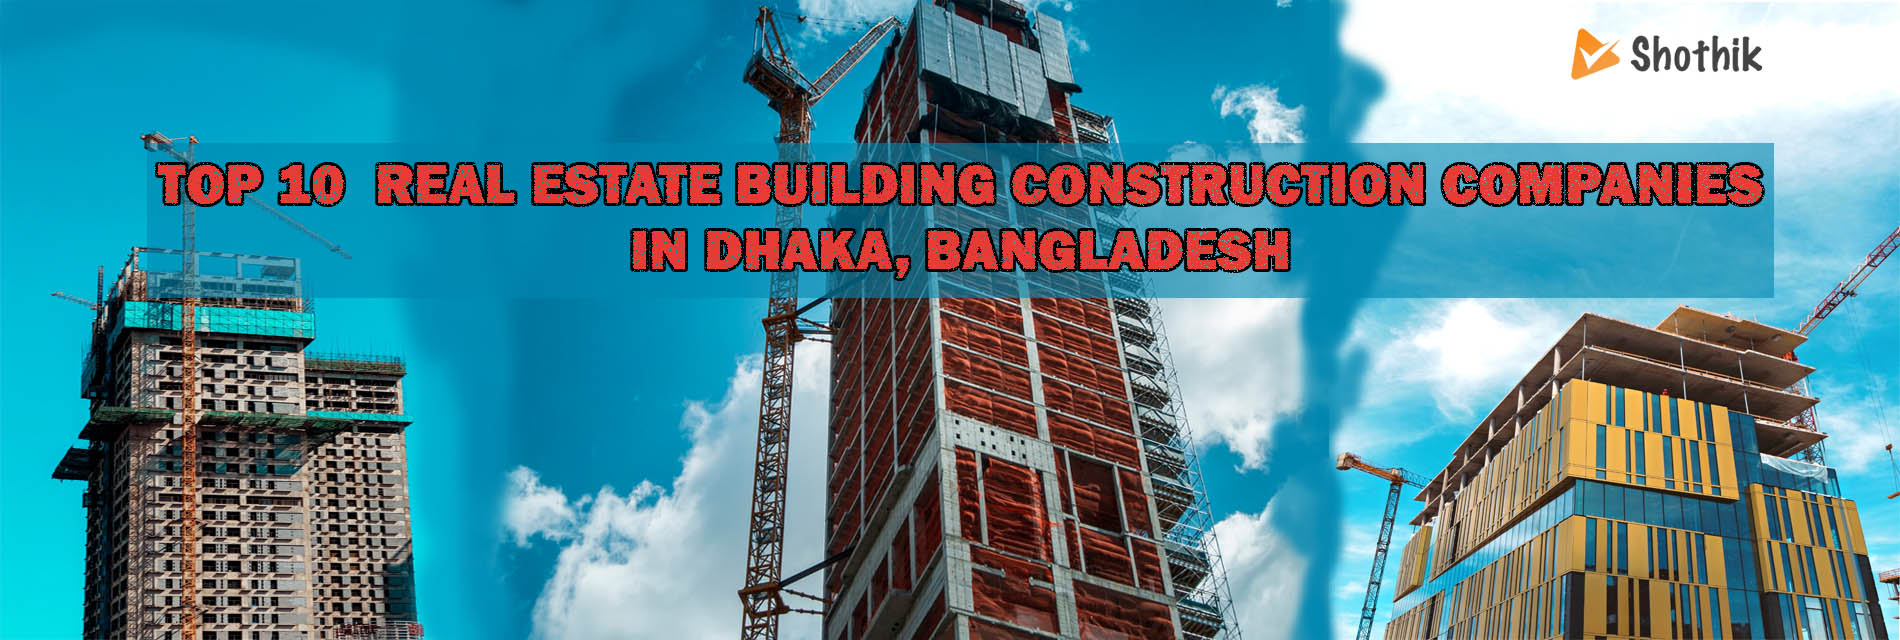 Top 10 Real estate Building Construction Companies in Dhaka, Bangladesh